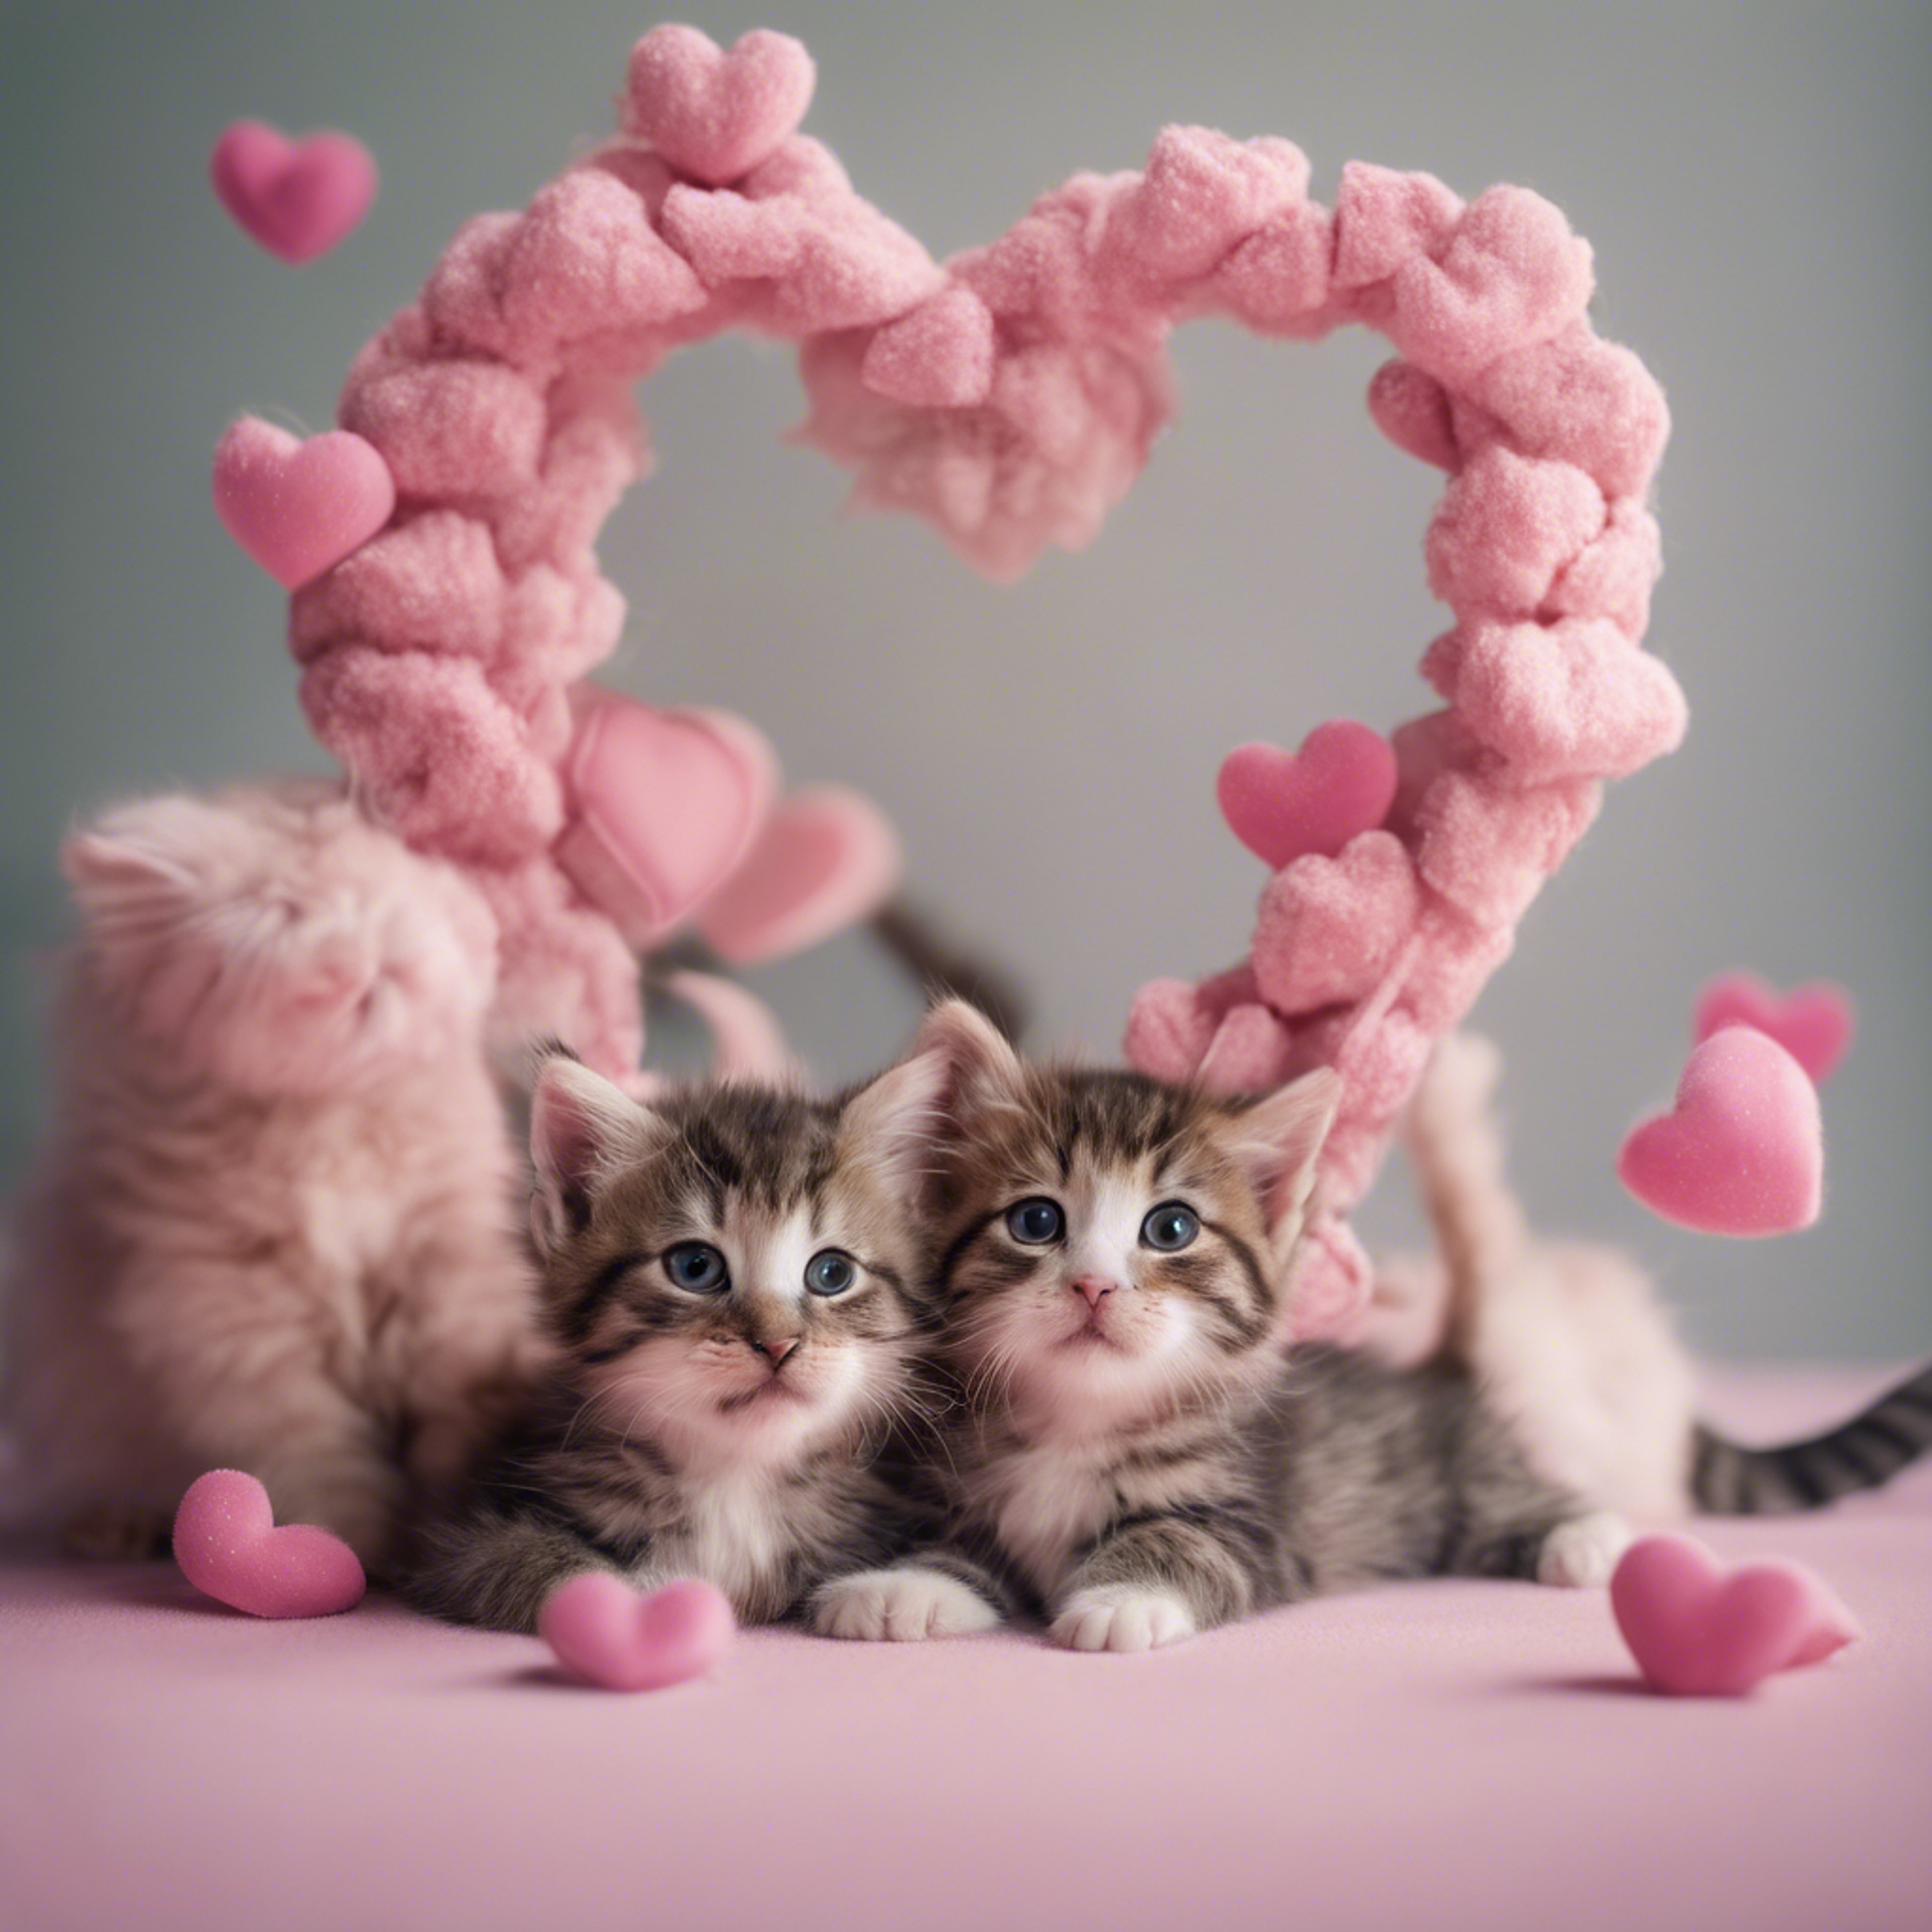 A litter of playful kitties cuddling to form a pink heart shape. Wallpaper[a2dfdb405dfe4c45ad0a]